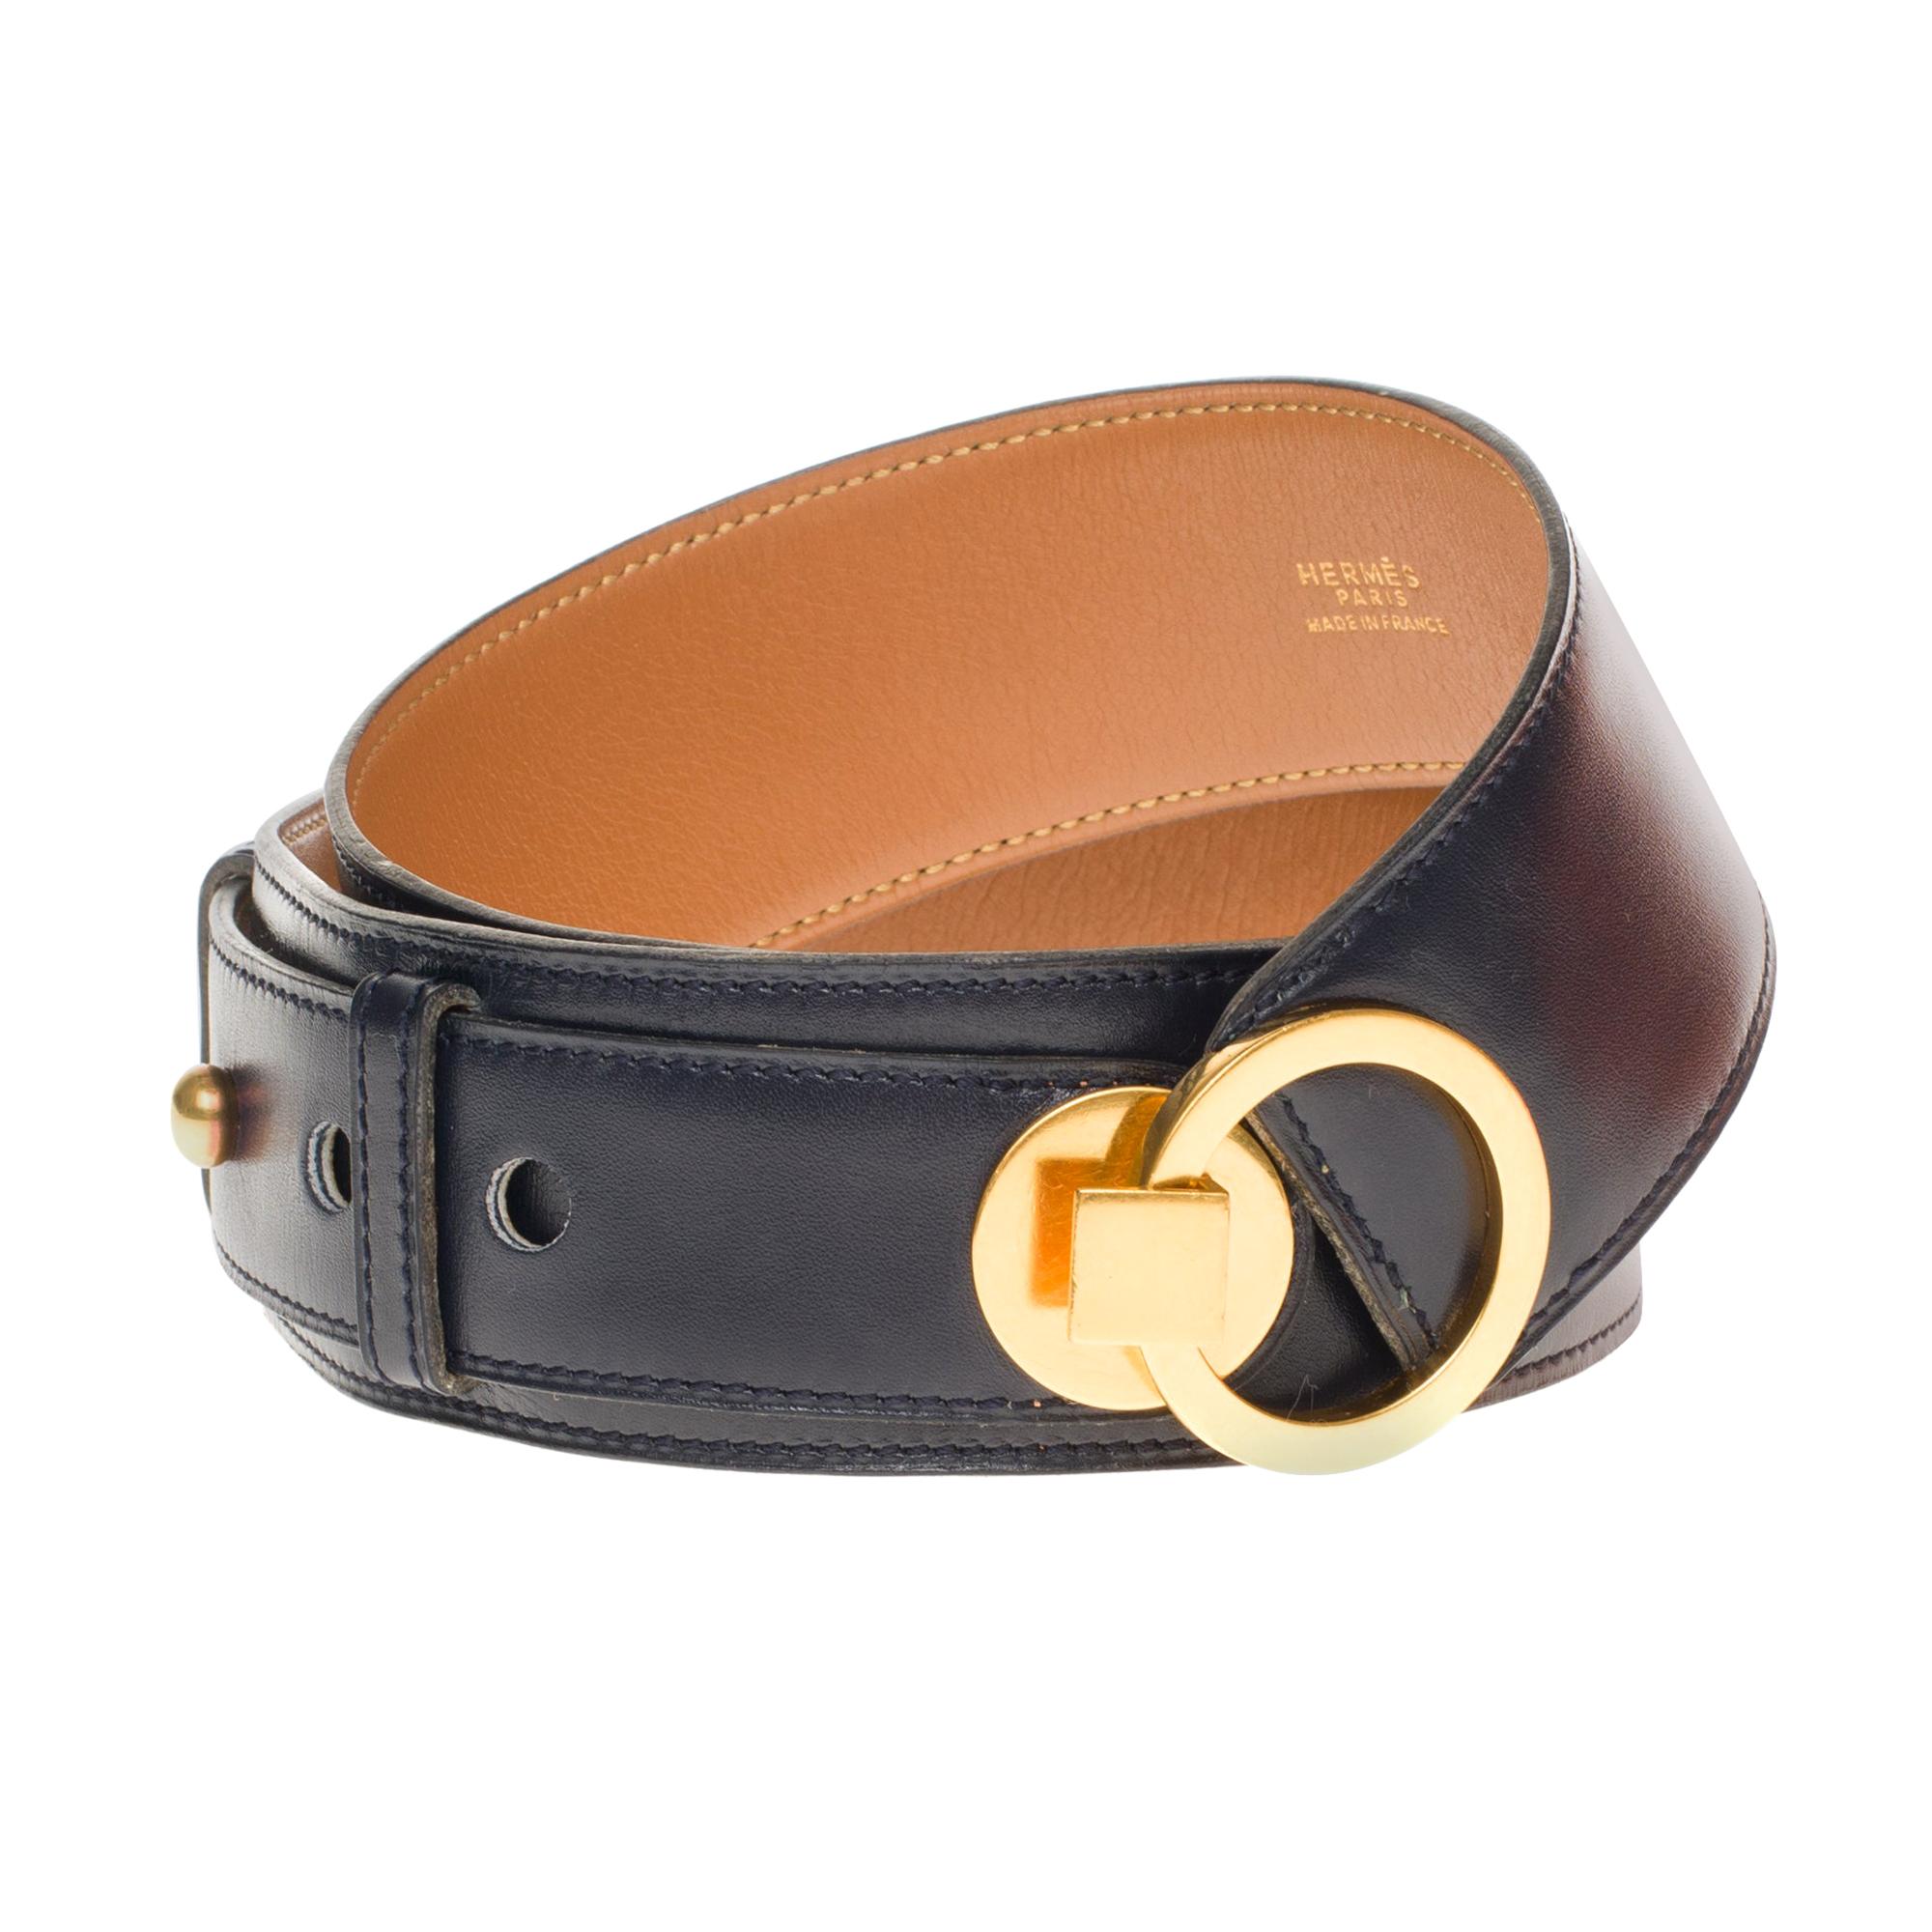 Hermès women belt model "Ring" in calf navy leather, gold hardware